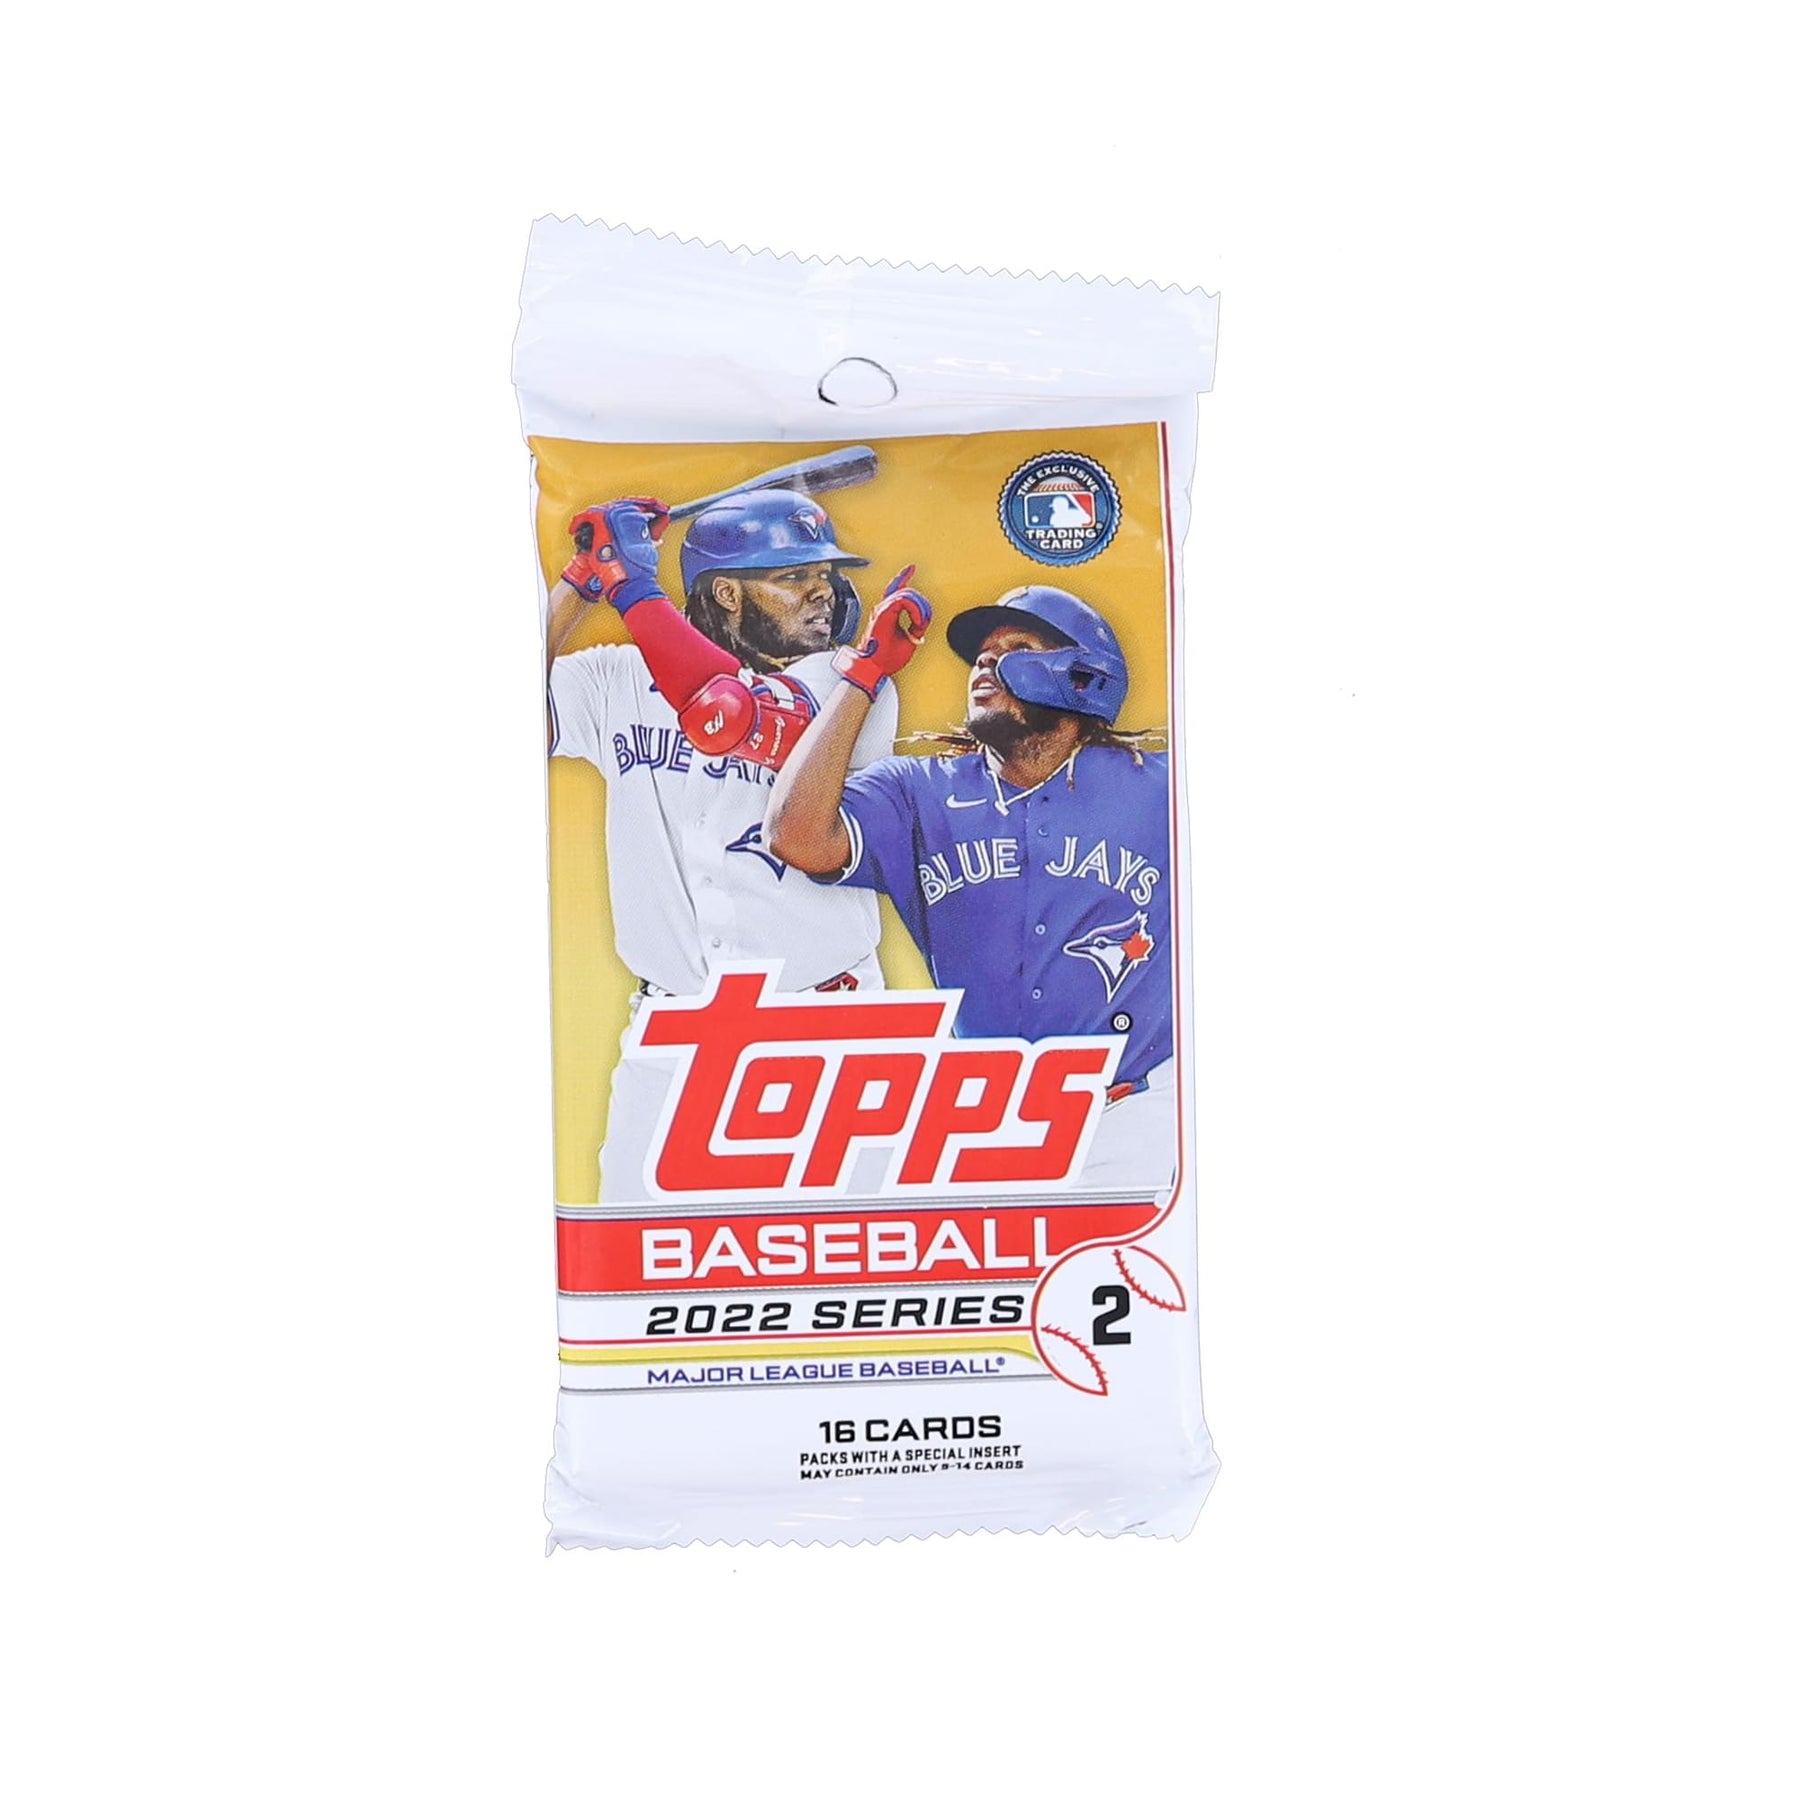 MLB 2022 Topps Baseball Series 2 Pack | 15 Cards and 1 Insert Card